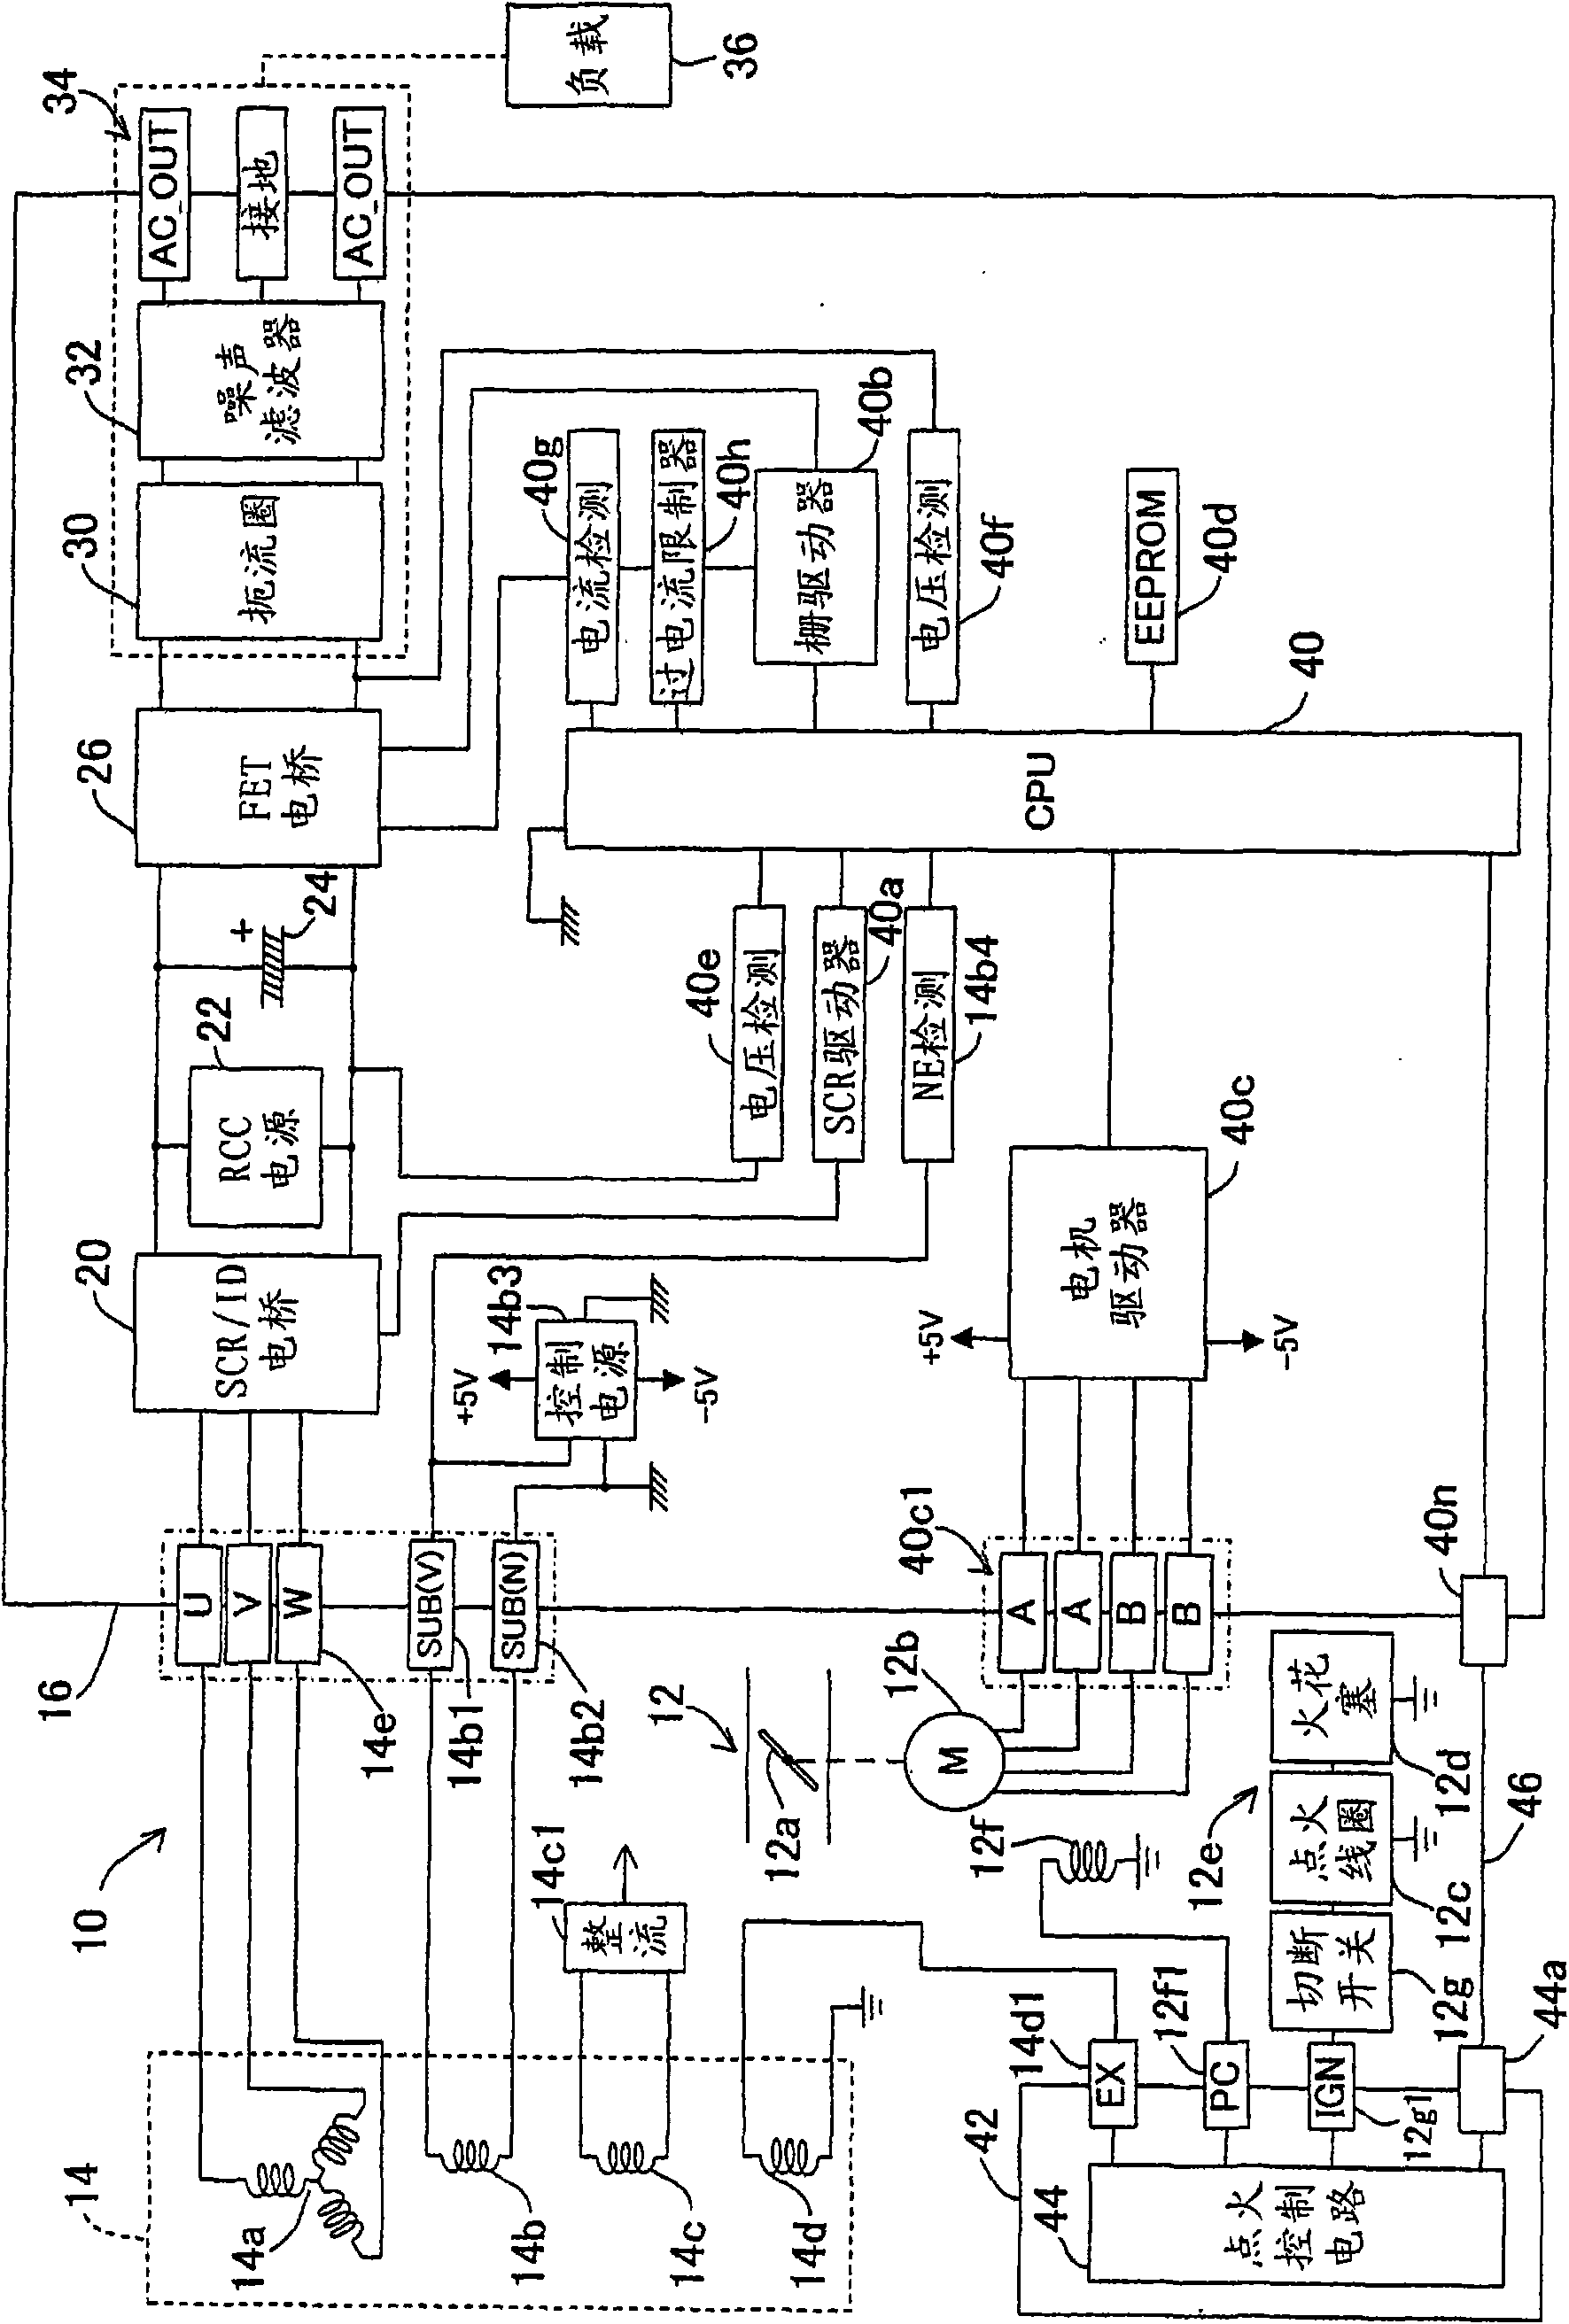 Inverter generator